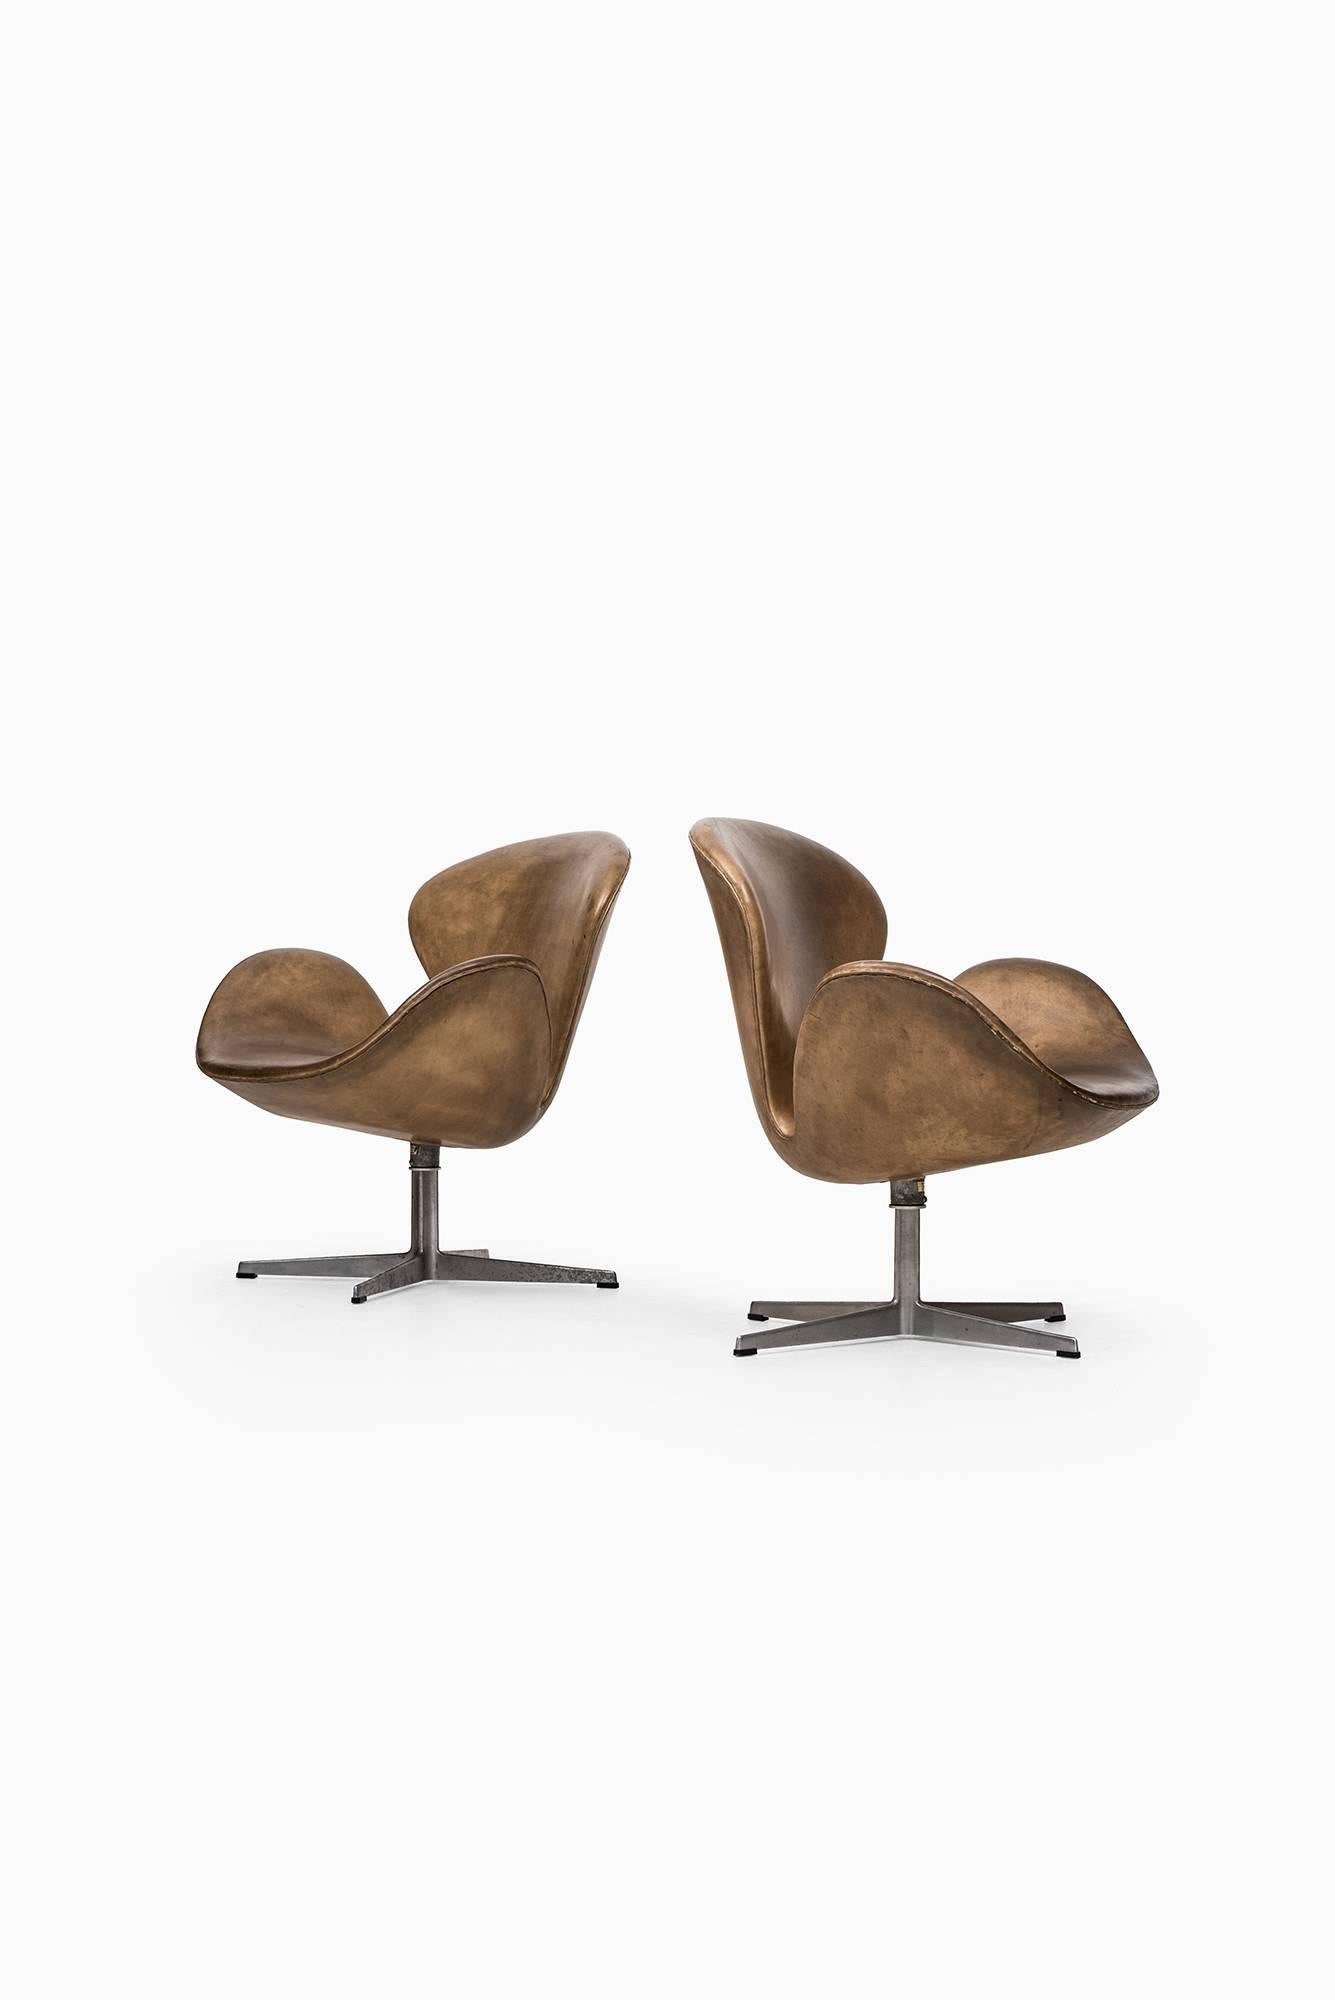 Danish Arne Jacobsen Swan Easy Chairs by Fritz Hansen in Denmark